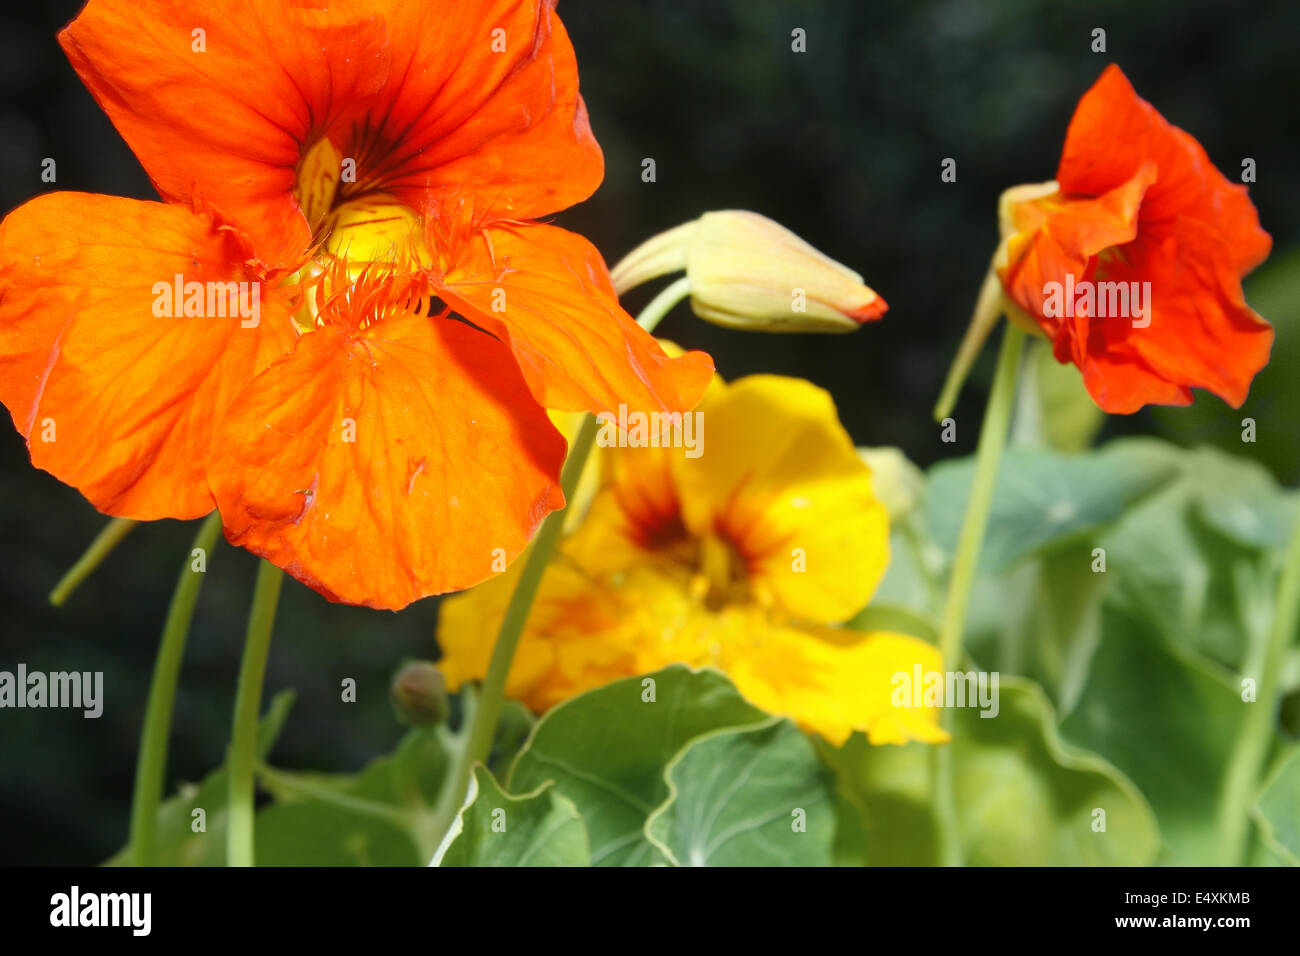 close up image of Nasturtium flowers Tropaeolum majus Stock Photo